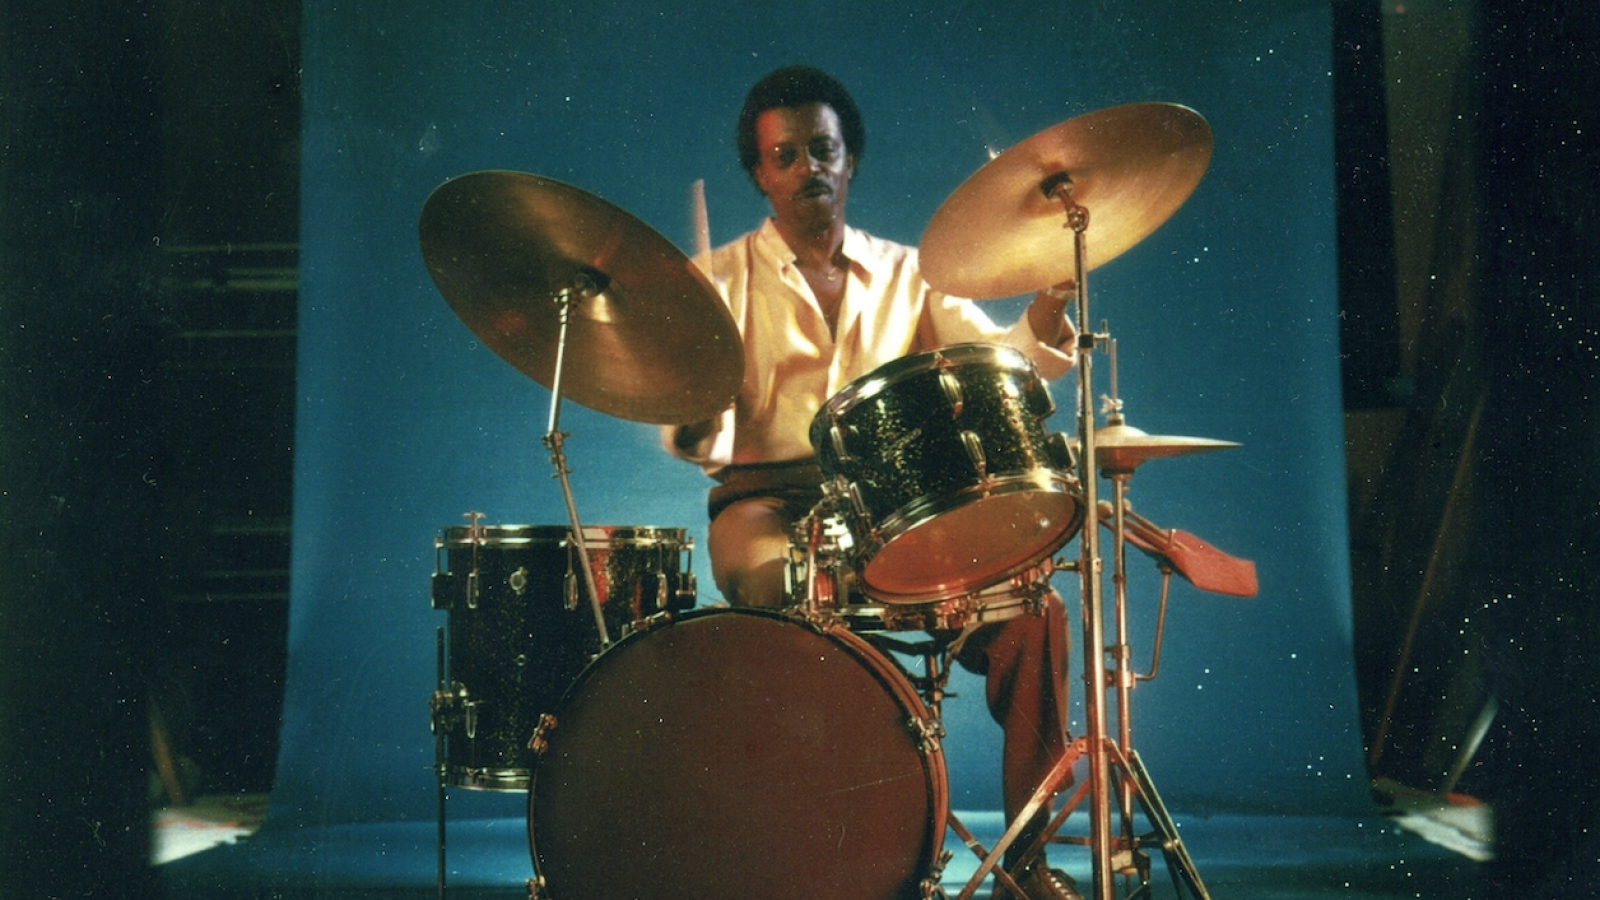 Young Philip Paul at drum set